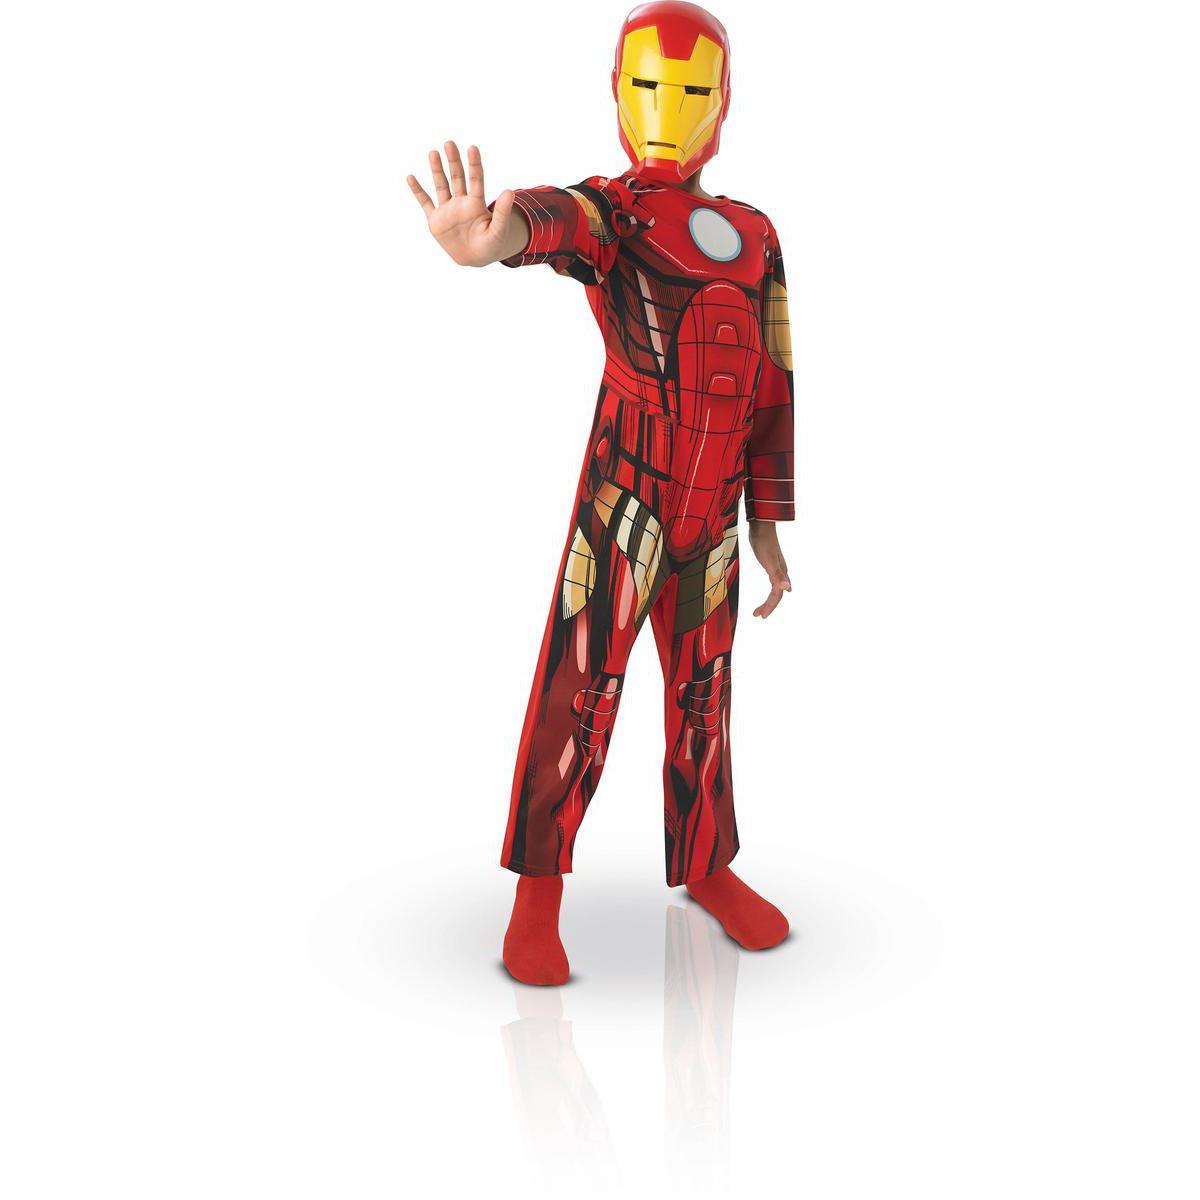 Déguisement Iron Man en polyester - Taille M - Rouge, Jaune